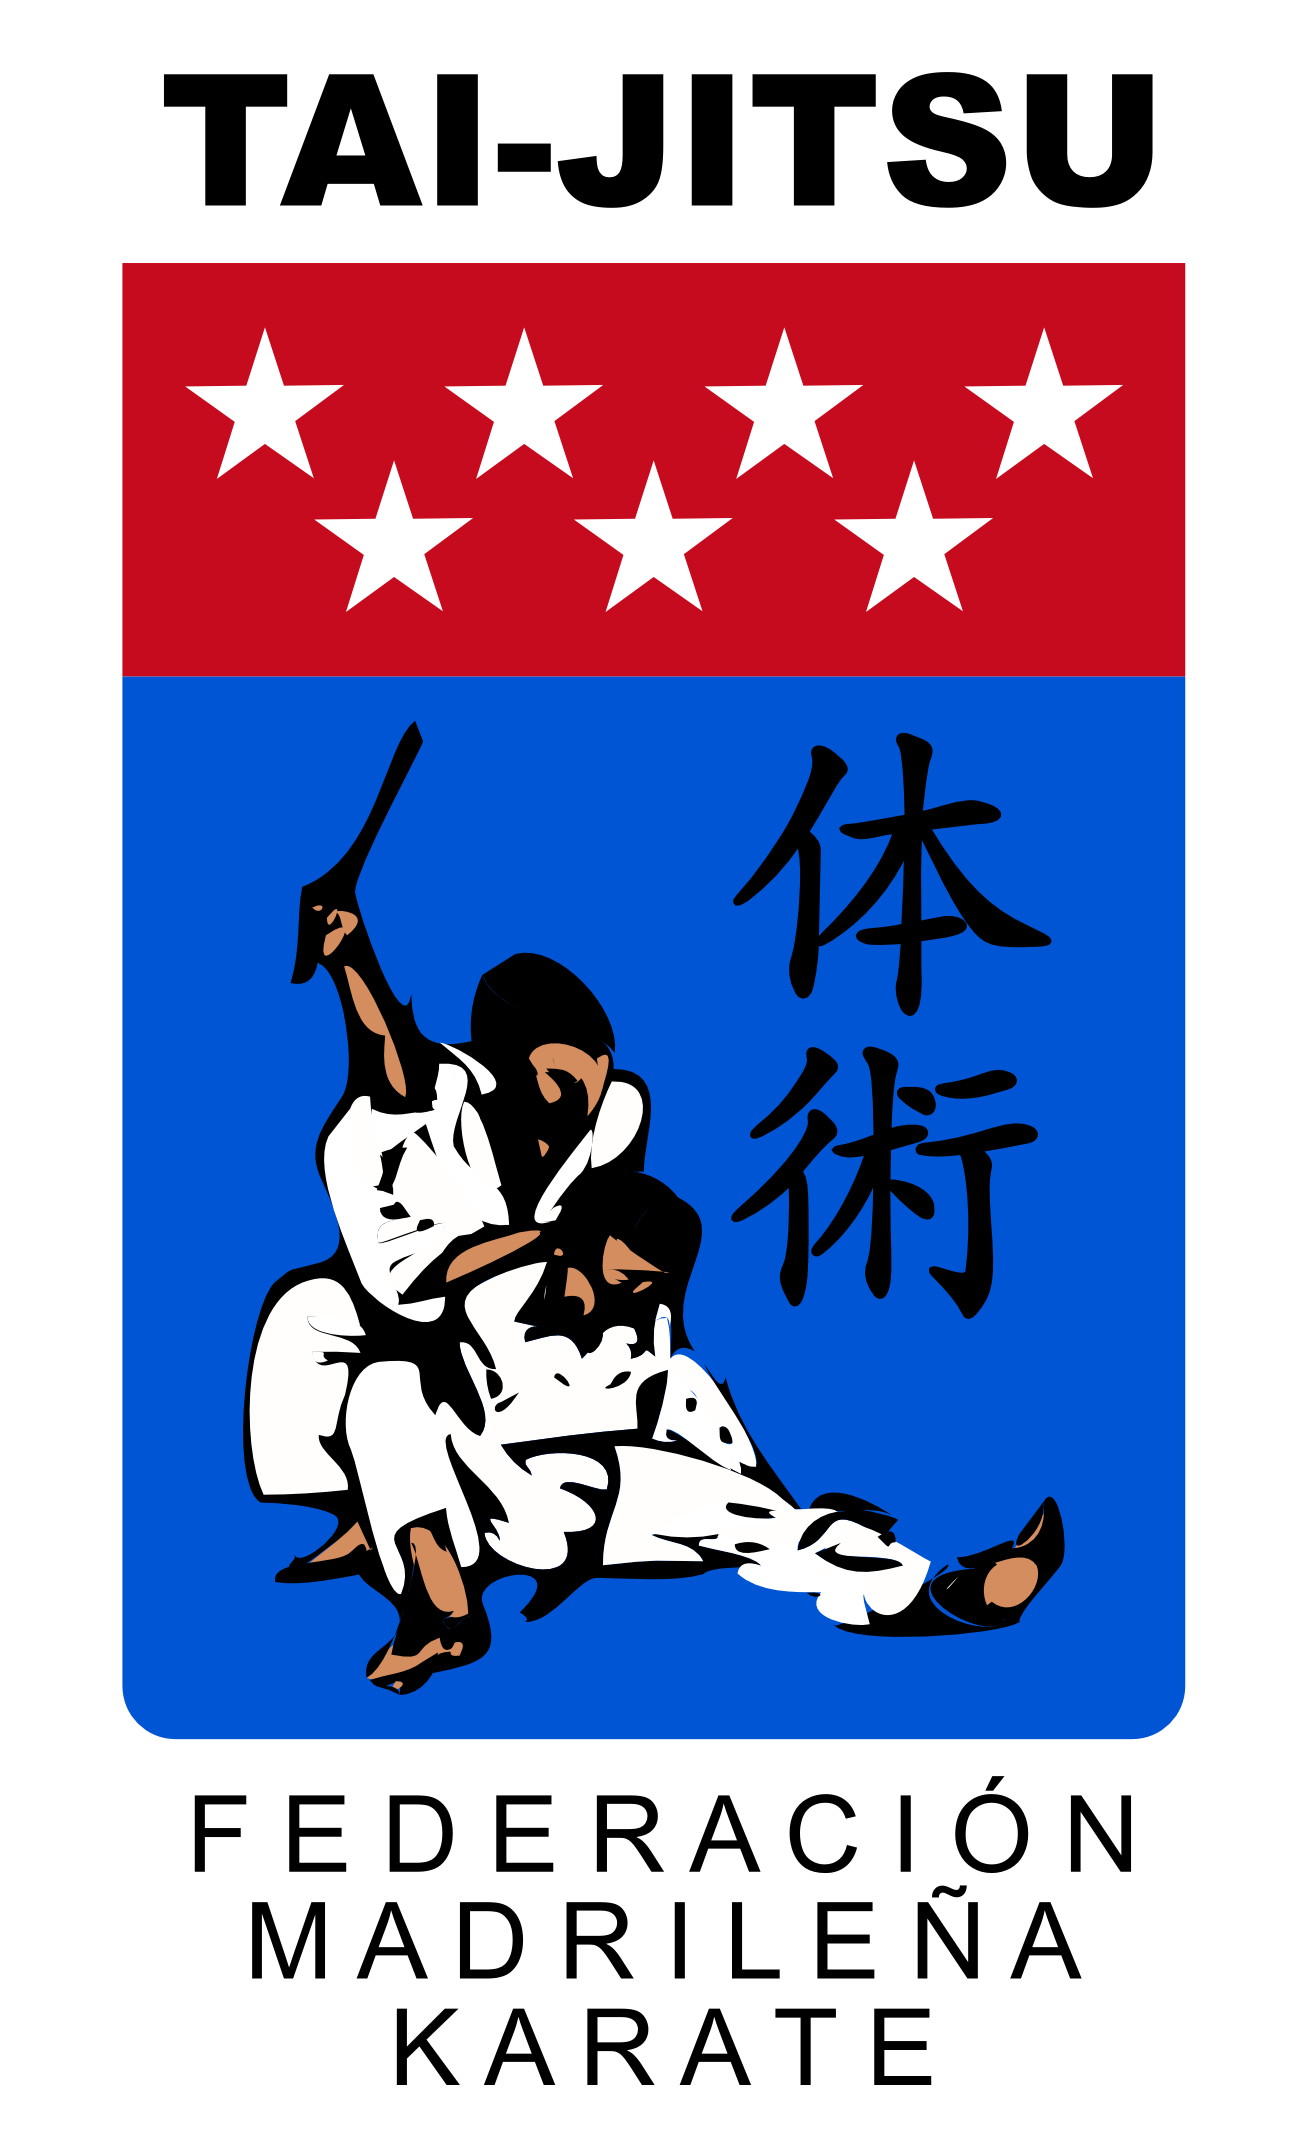 Logo Federacion Madrileña